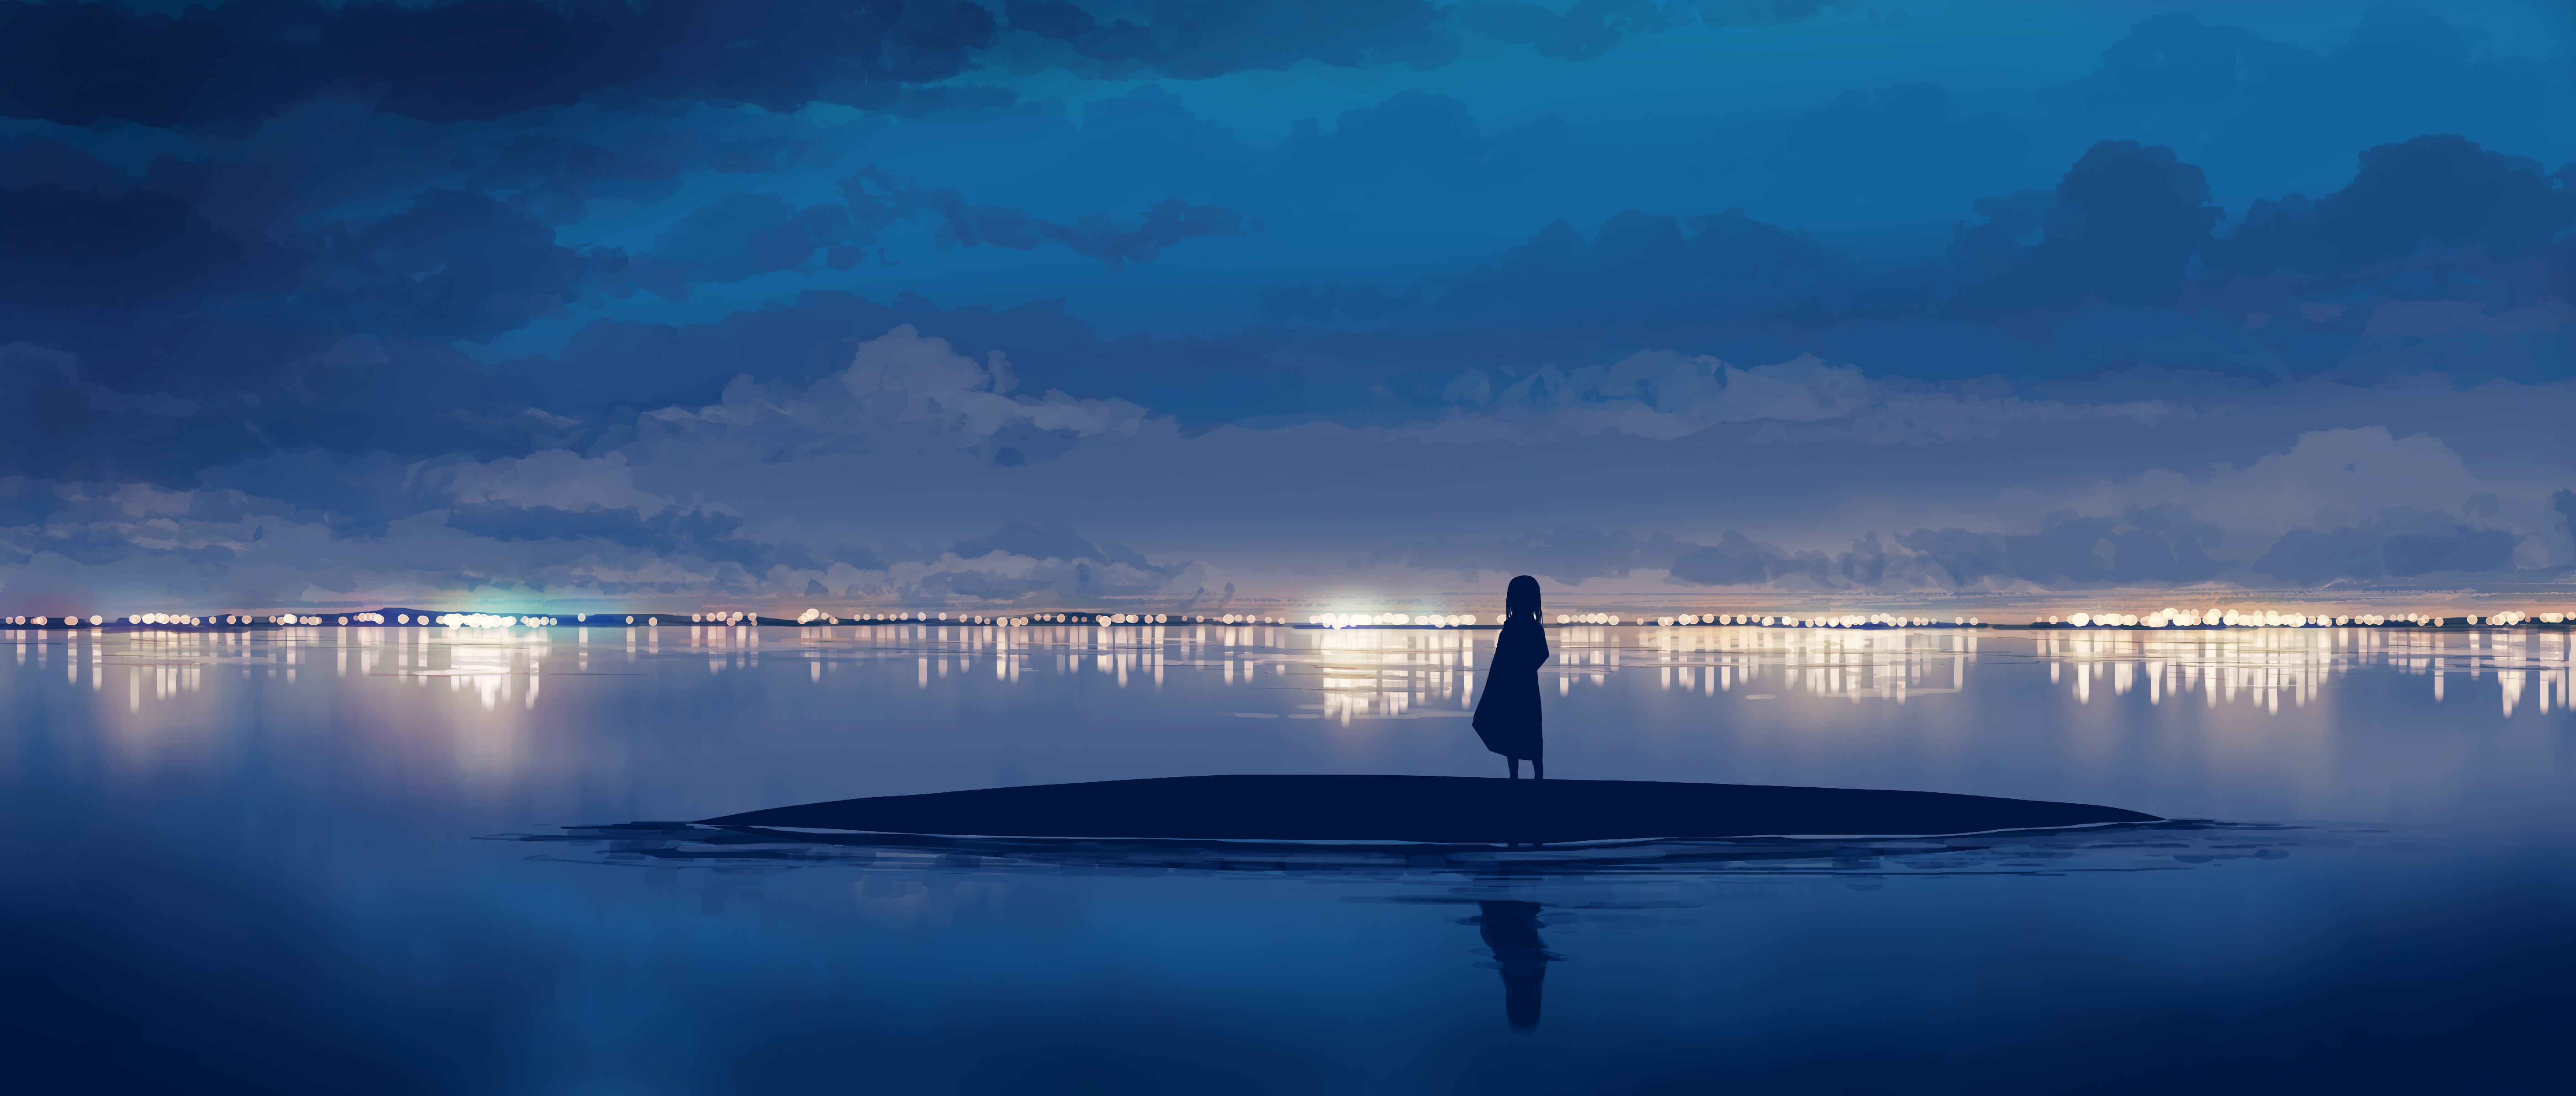 Anime Anime Sky Artwork Anime Girls Horizon Clouds Sky Silhouette Gracile Riverside Reflection Light 5640x2400